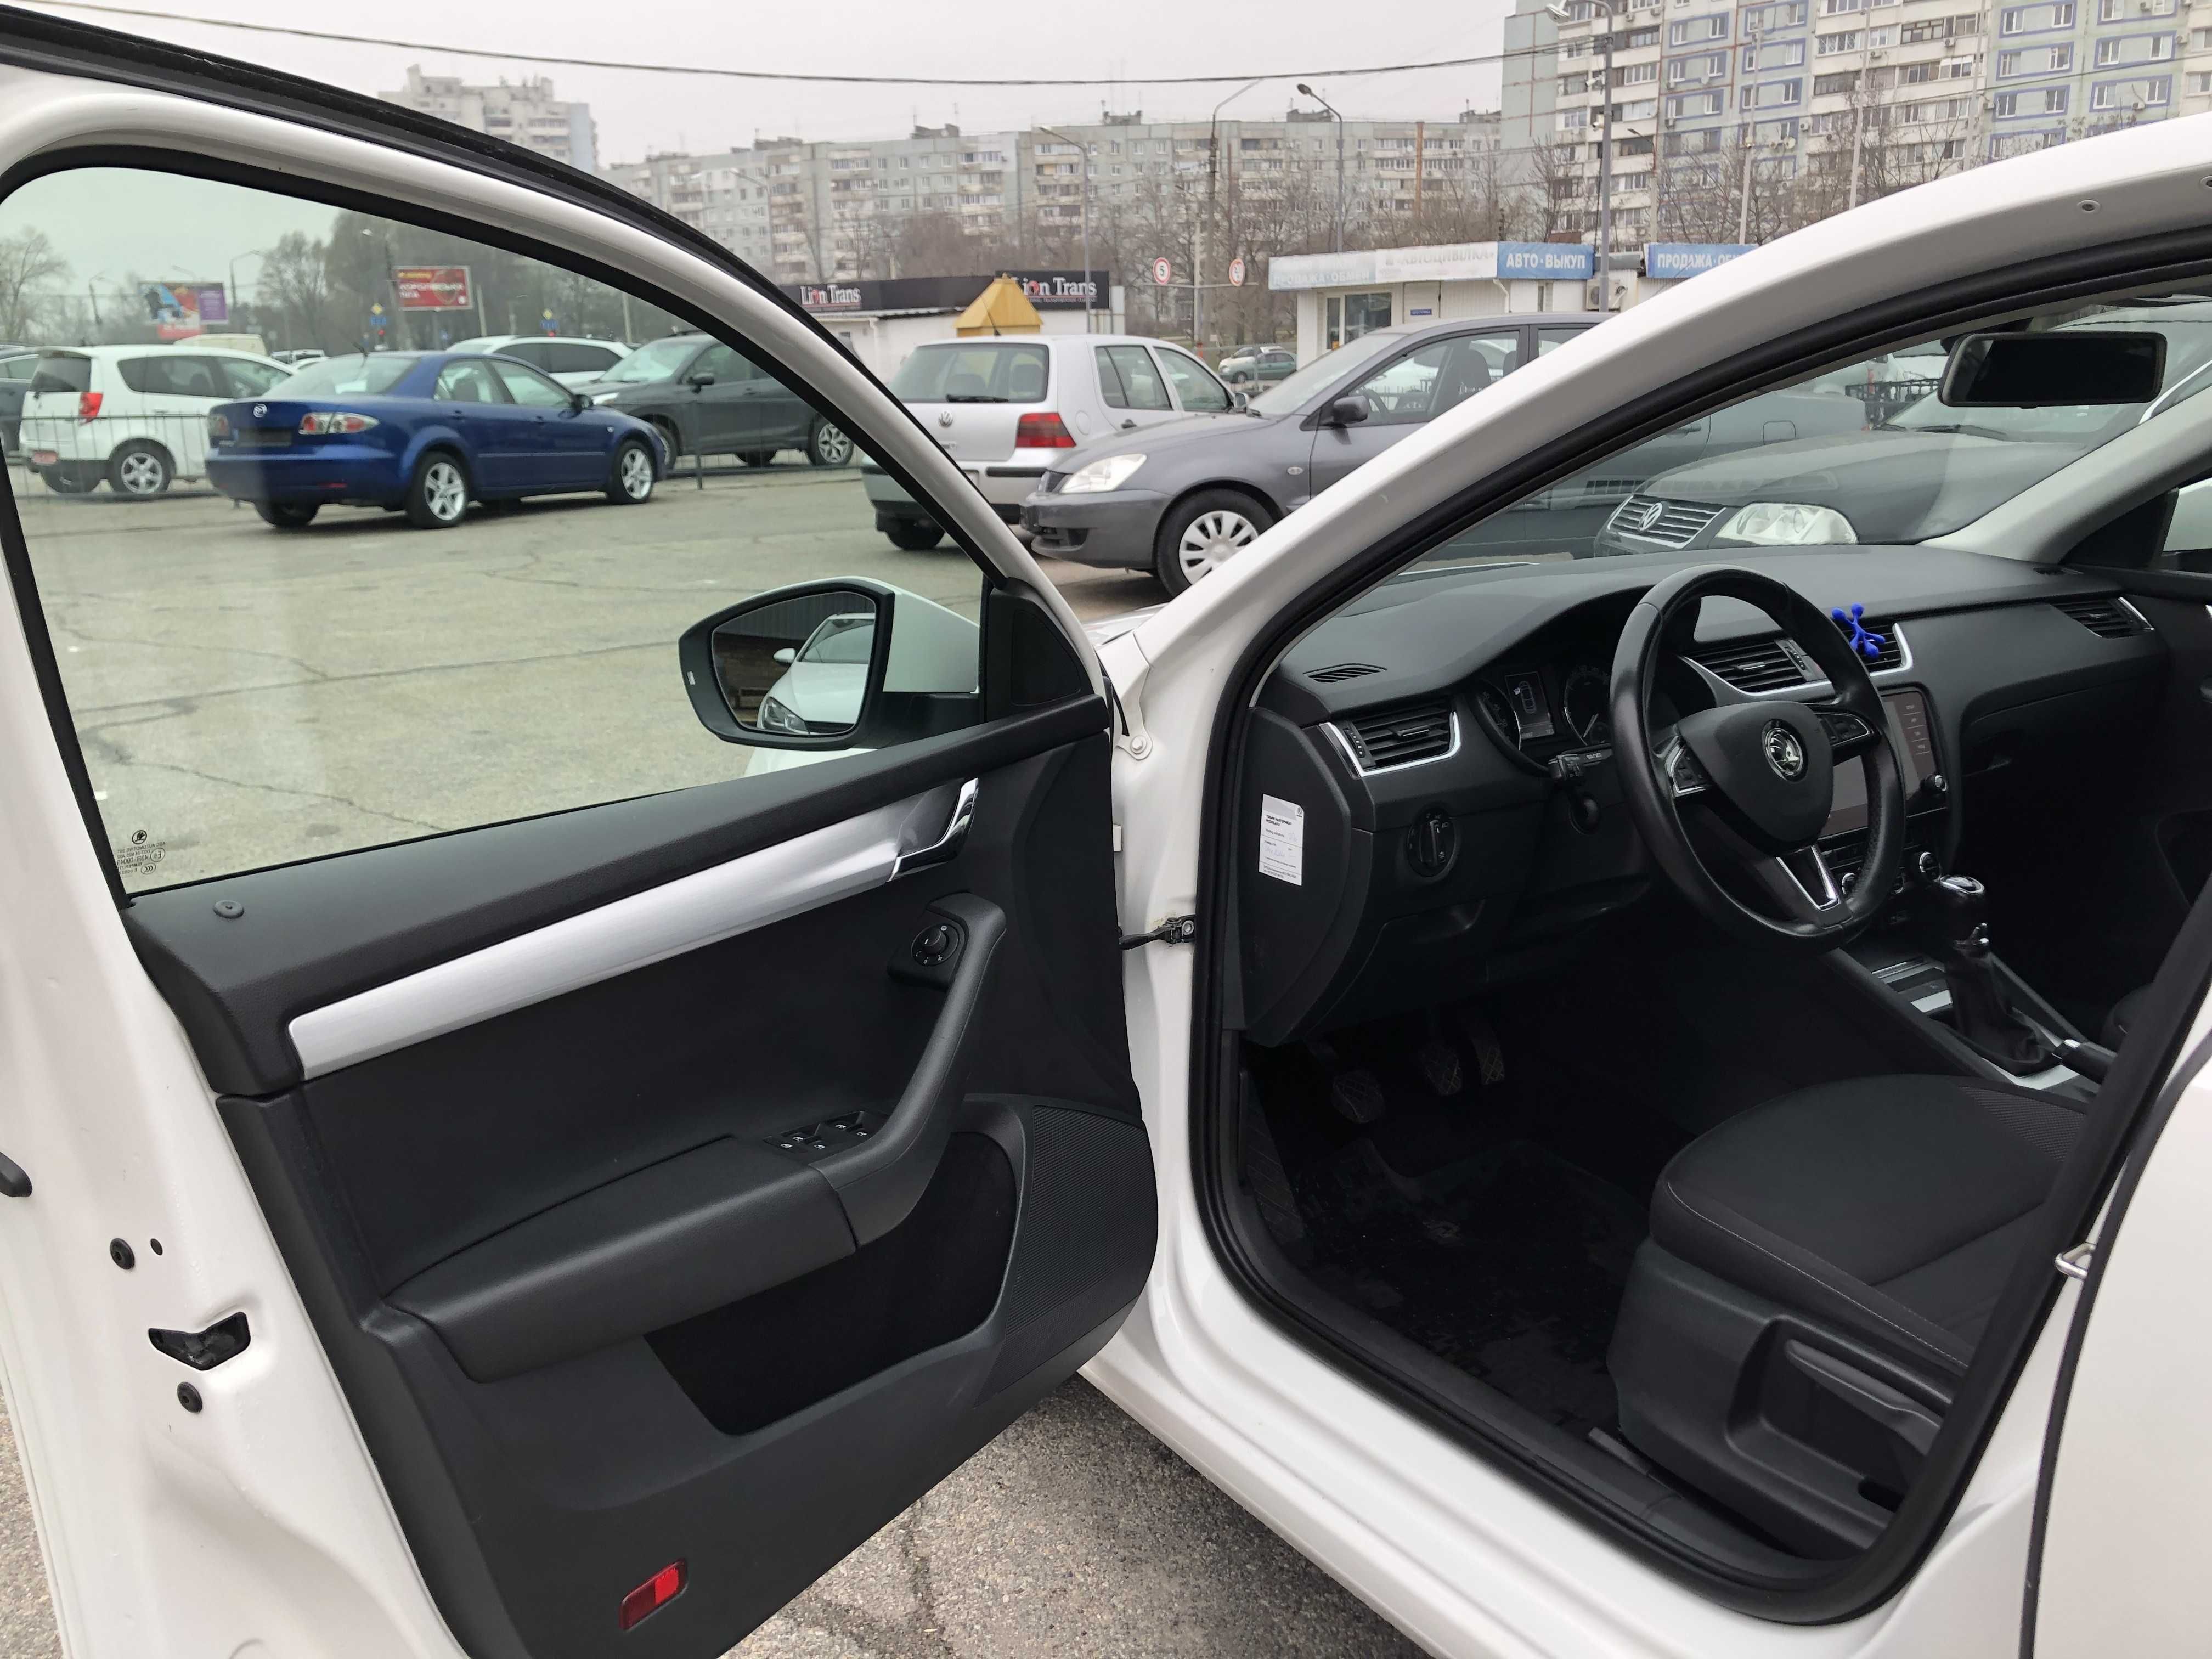 Продам SKODA OCTAVIA A7 1,6 TDI Turbo-Diesel 2019 года.